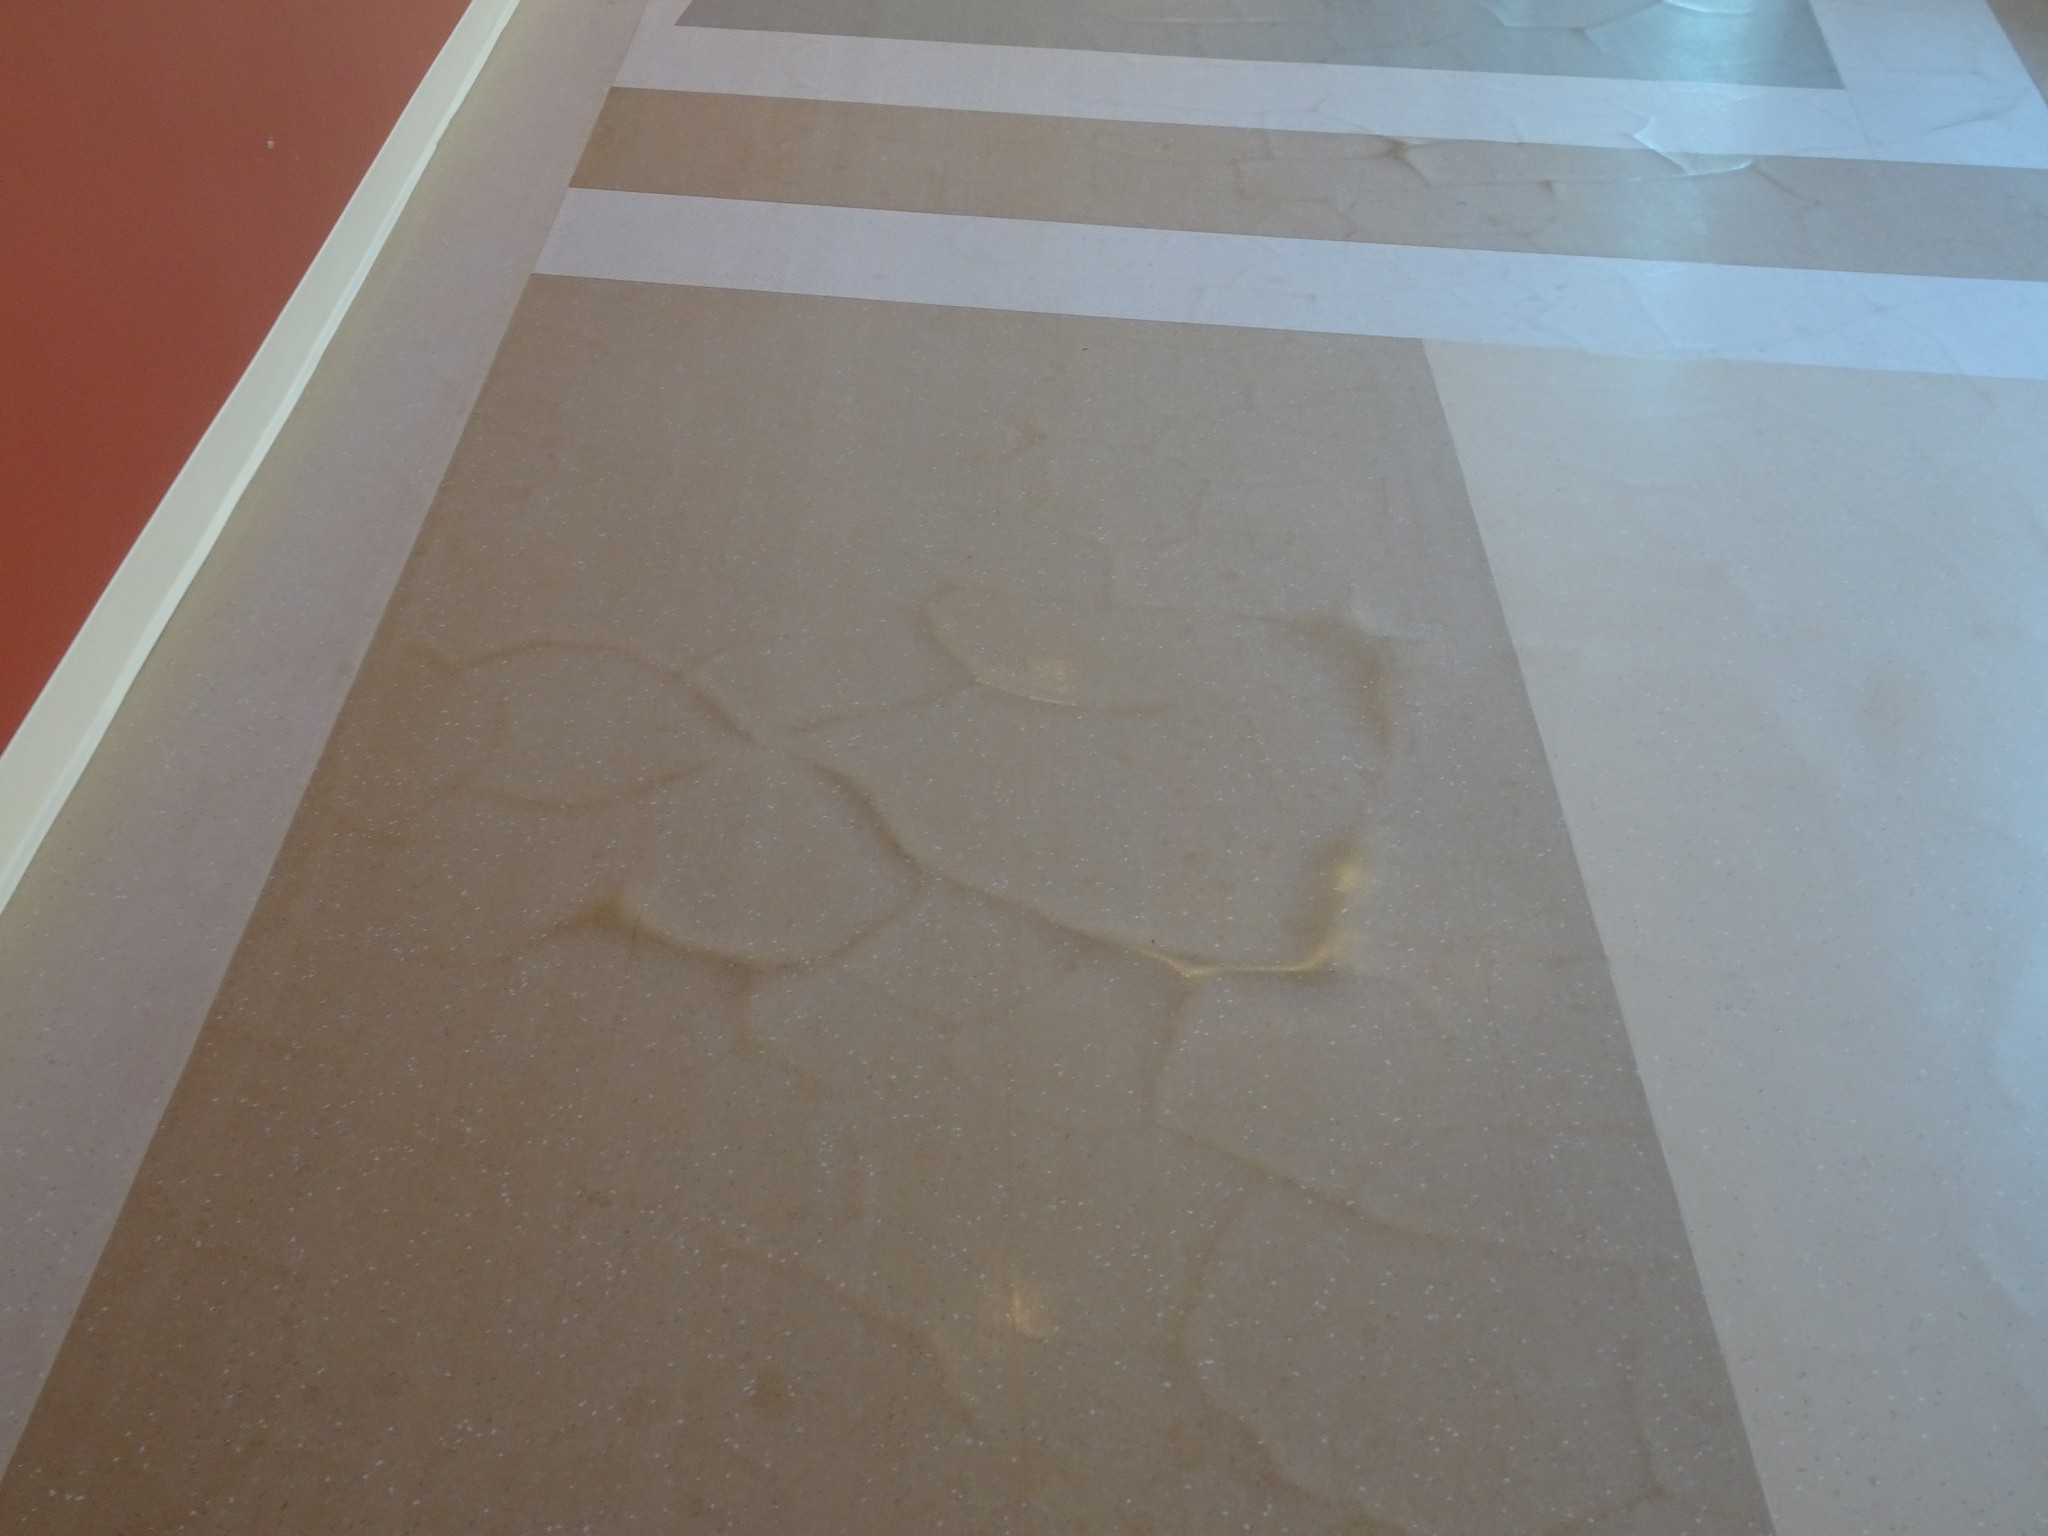 Debonding of resilient sheet vinyl flooring